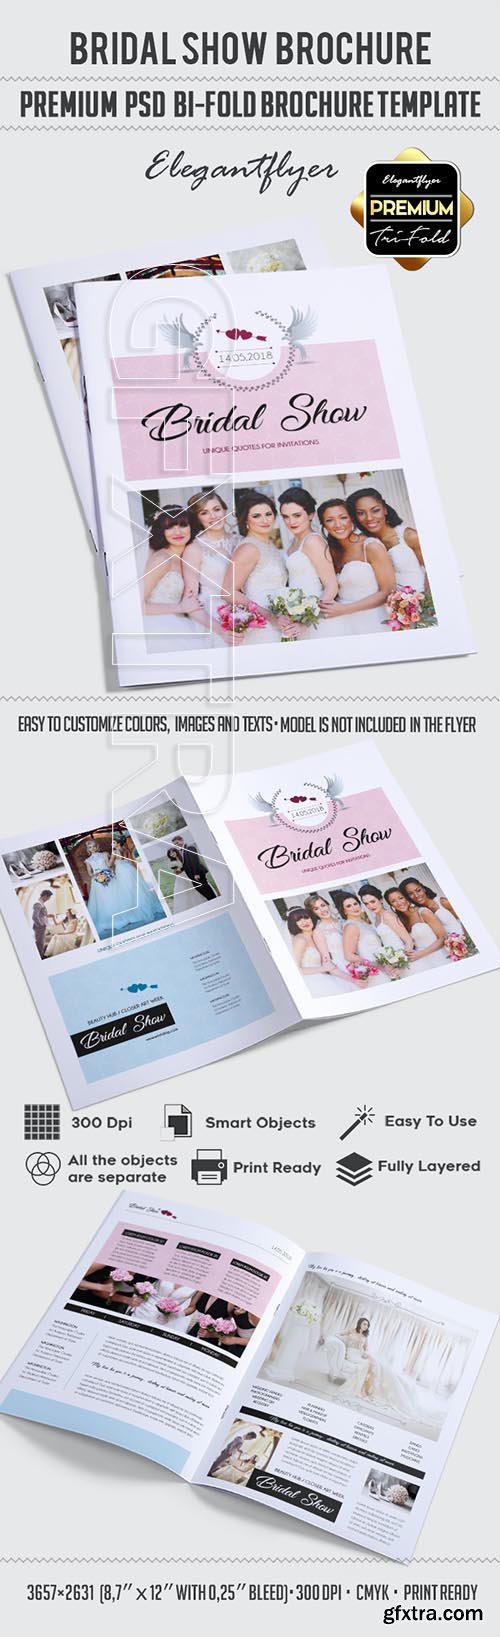 Bridal Show – Premium Bi-Fold PSD Brochure Template